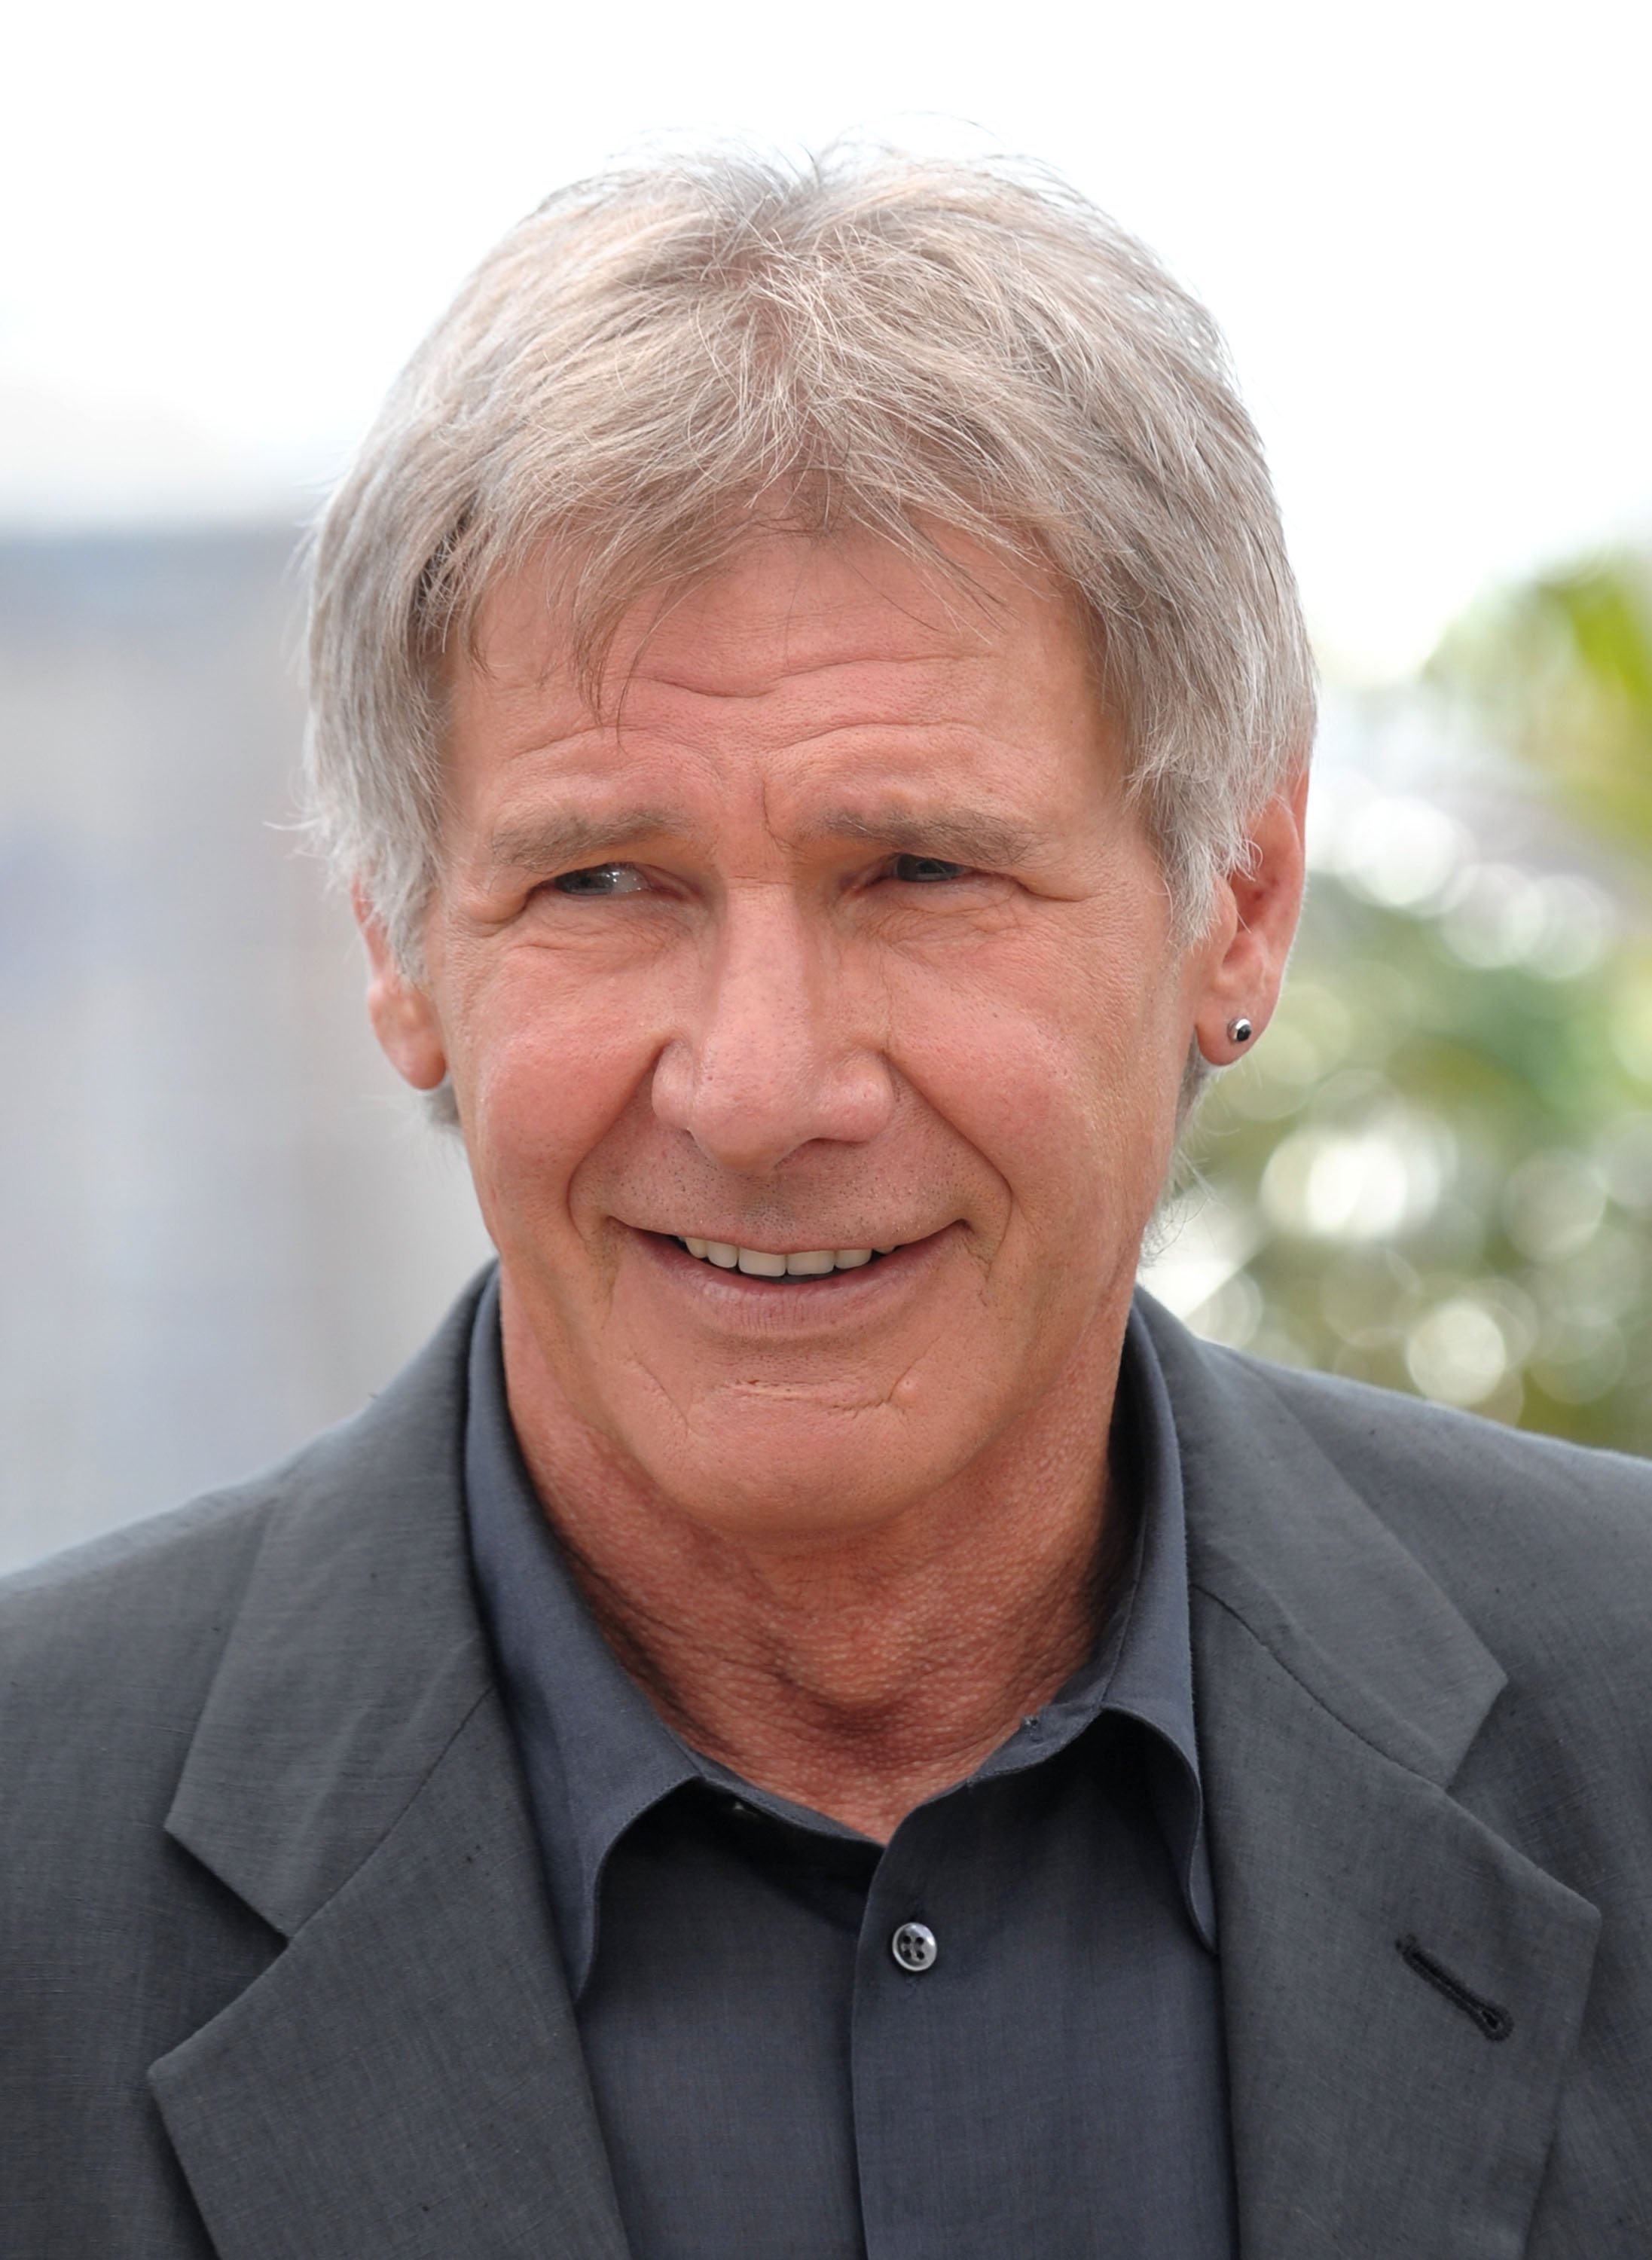 Harrison Ford en el Festival de Cannes en 2003 | Foto: Getty Images